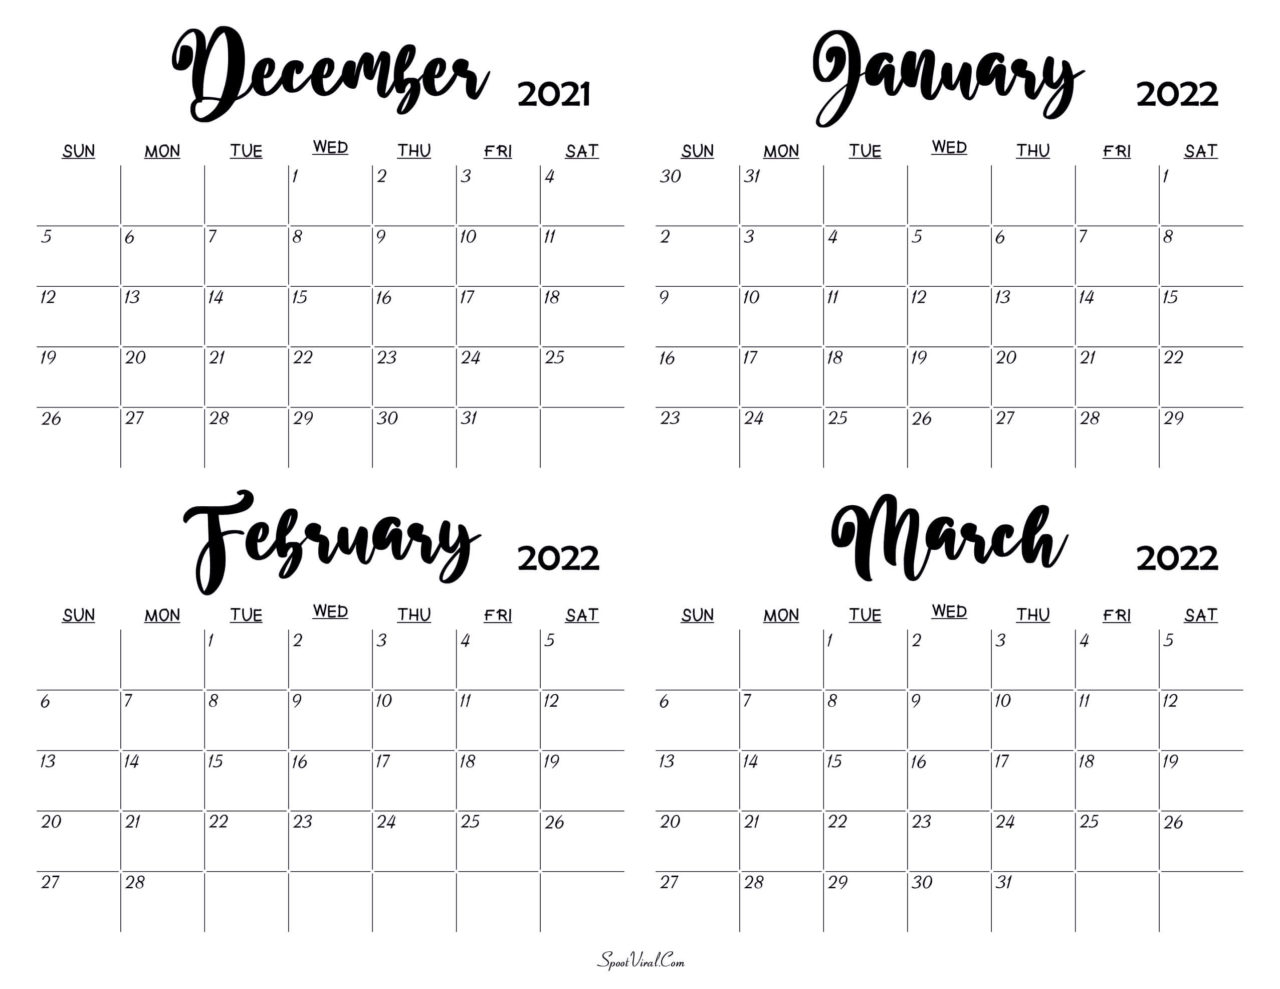 December 2021 To January 2022 Calendar Templates - Spootviral